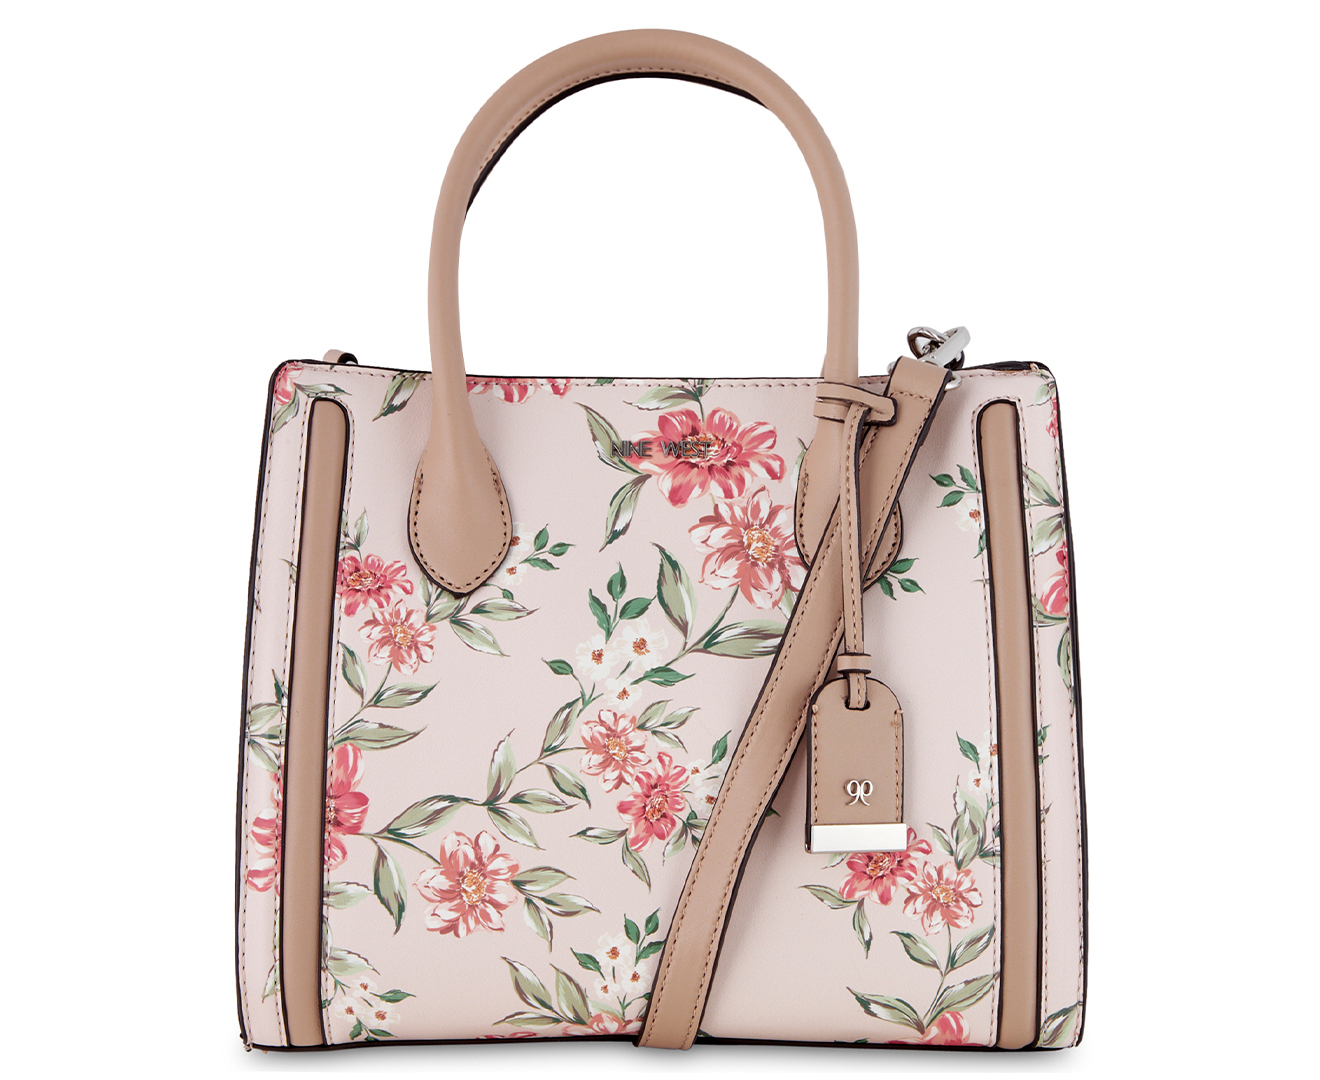 Nine West Aidenne Satchel Bag - Begonia Floral | Catch.co.nz